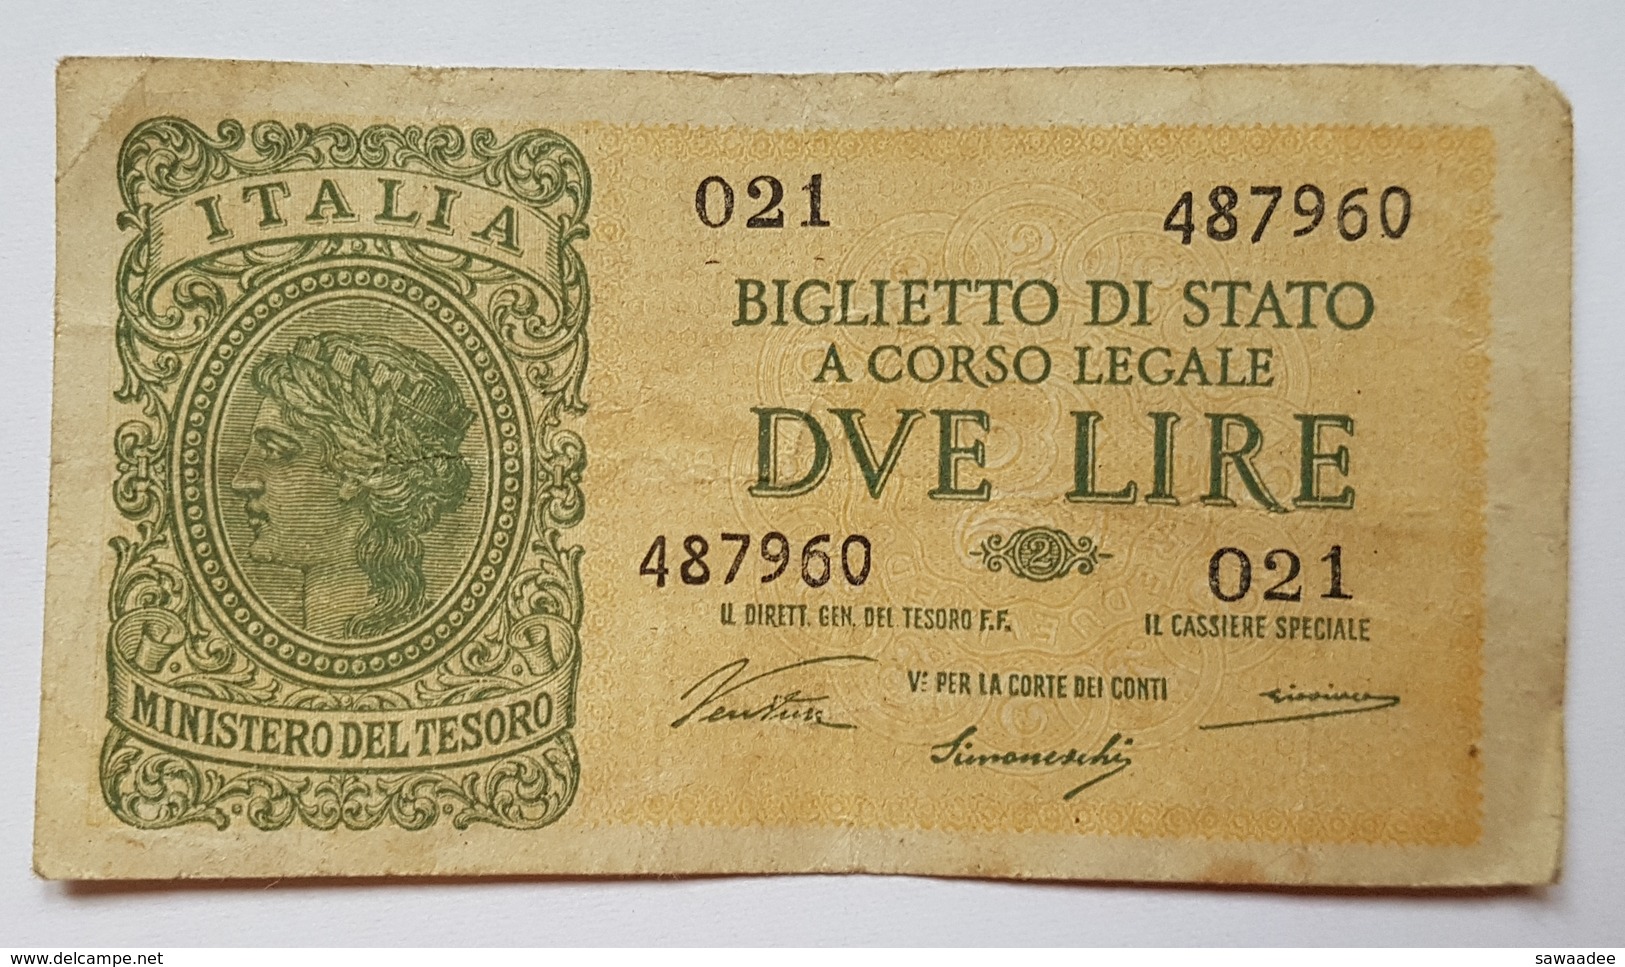 BILLET ITALIE - ROYAUME D'ITALIE - P.30a - 2 LIRES - 23/11/44 - ITALIA - Italia – 2 Lire